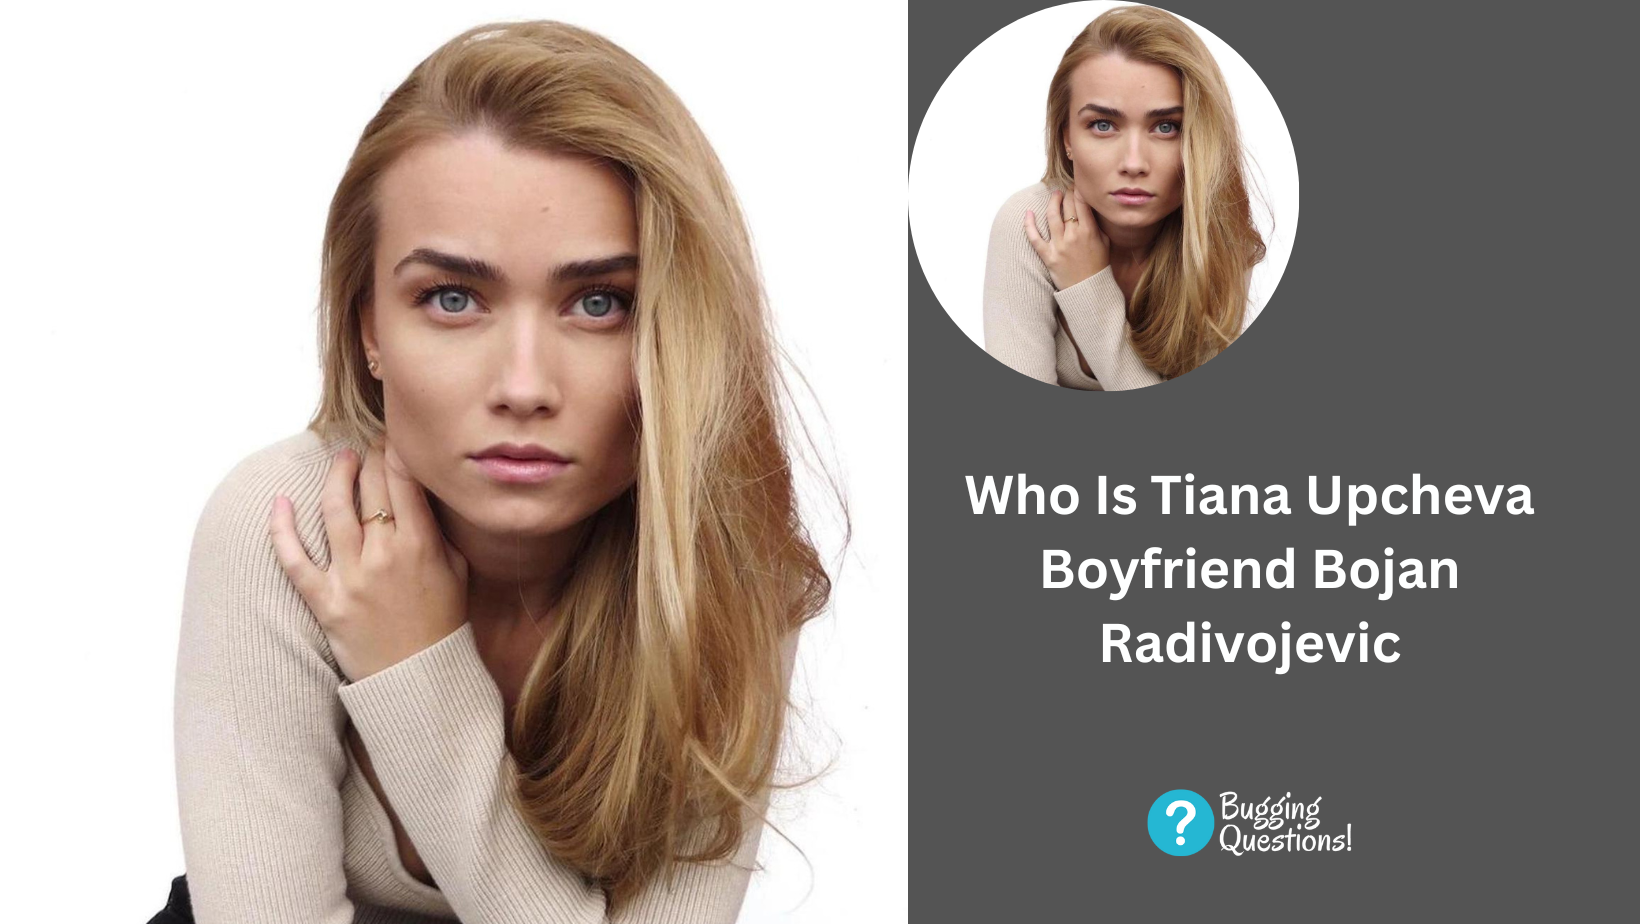 Who Is Tiana Upcheva Boyfriend Bojan Radivojevic